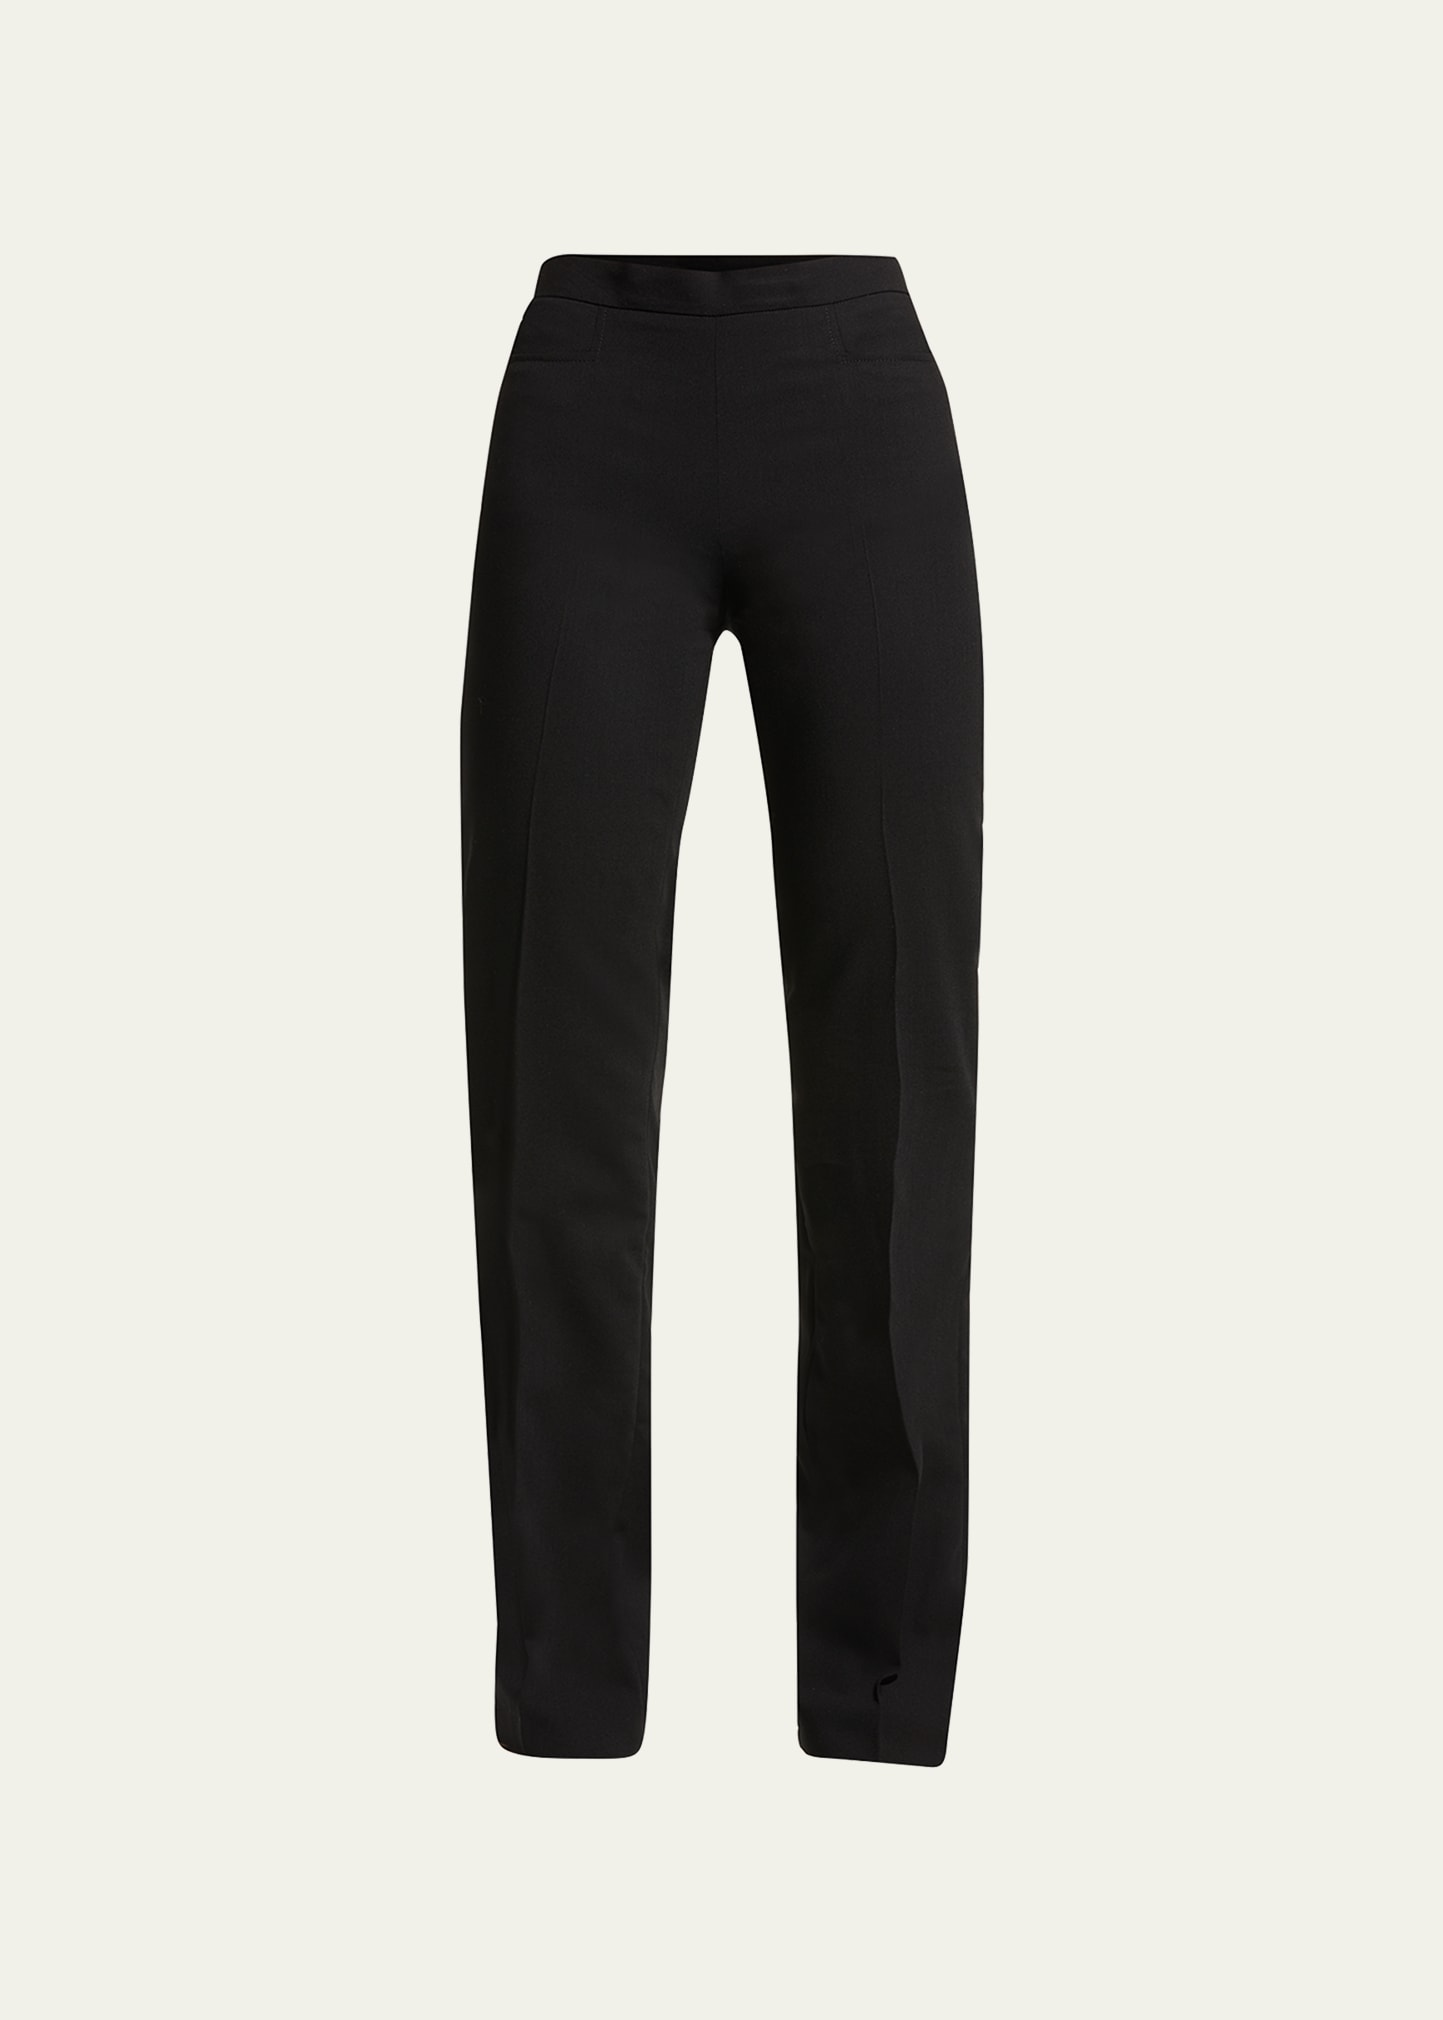 Francoise Slim-Straight Pants, Black